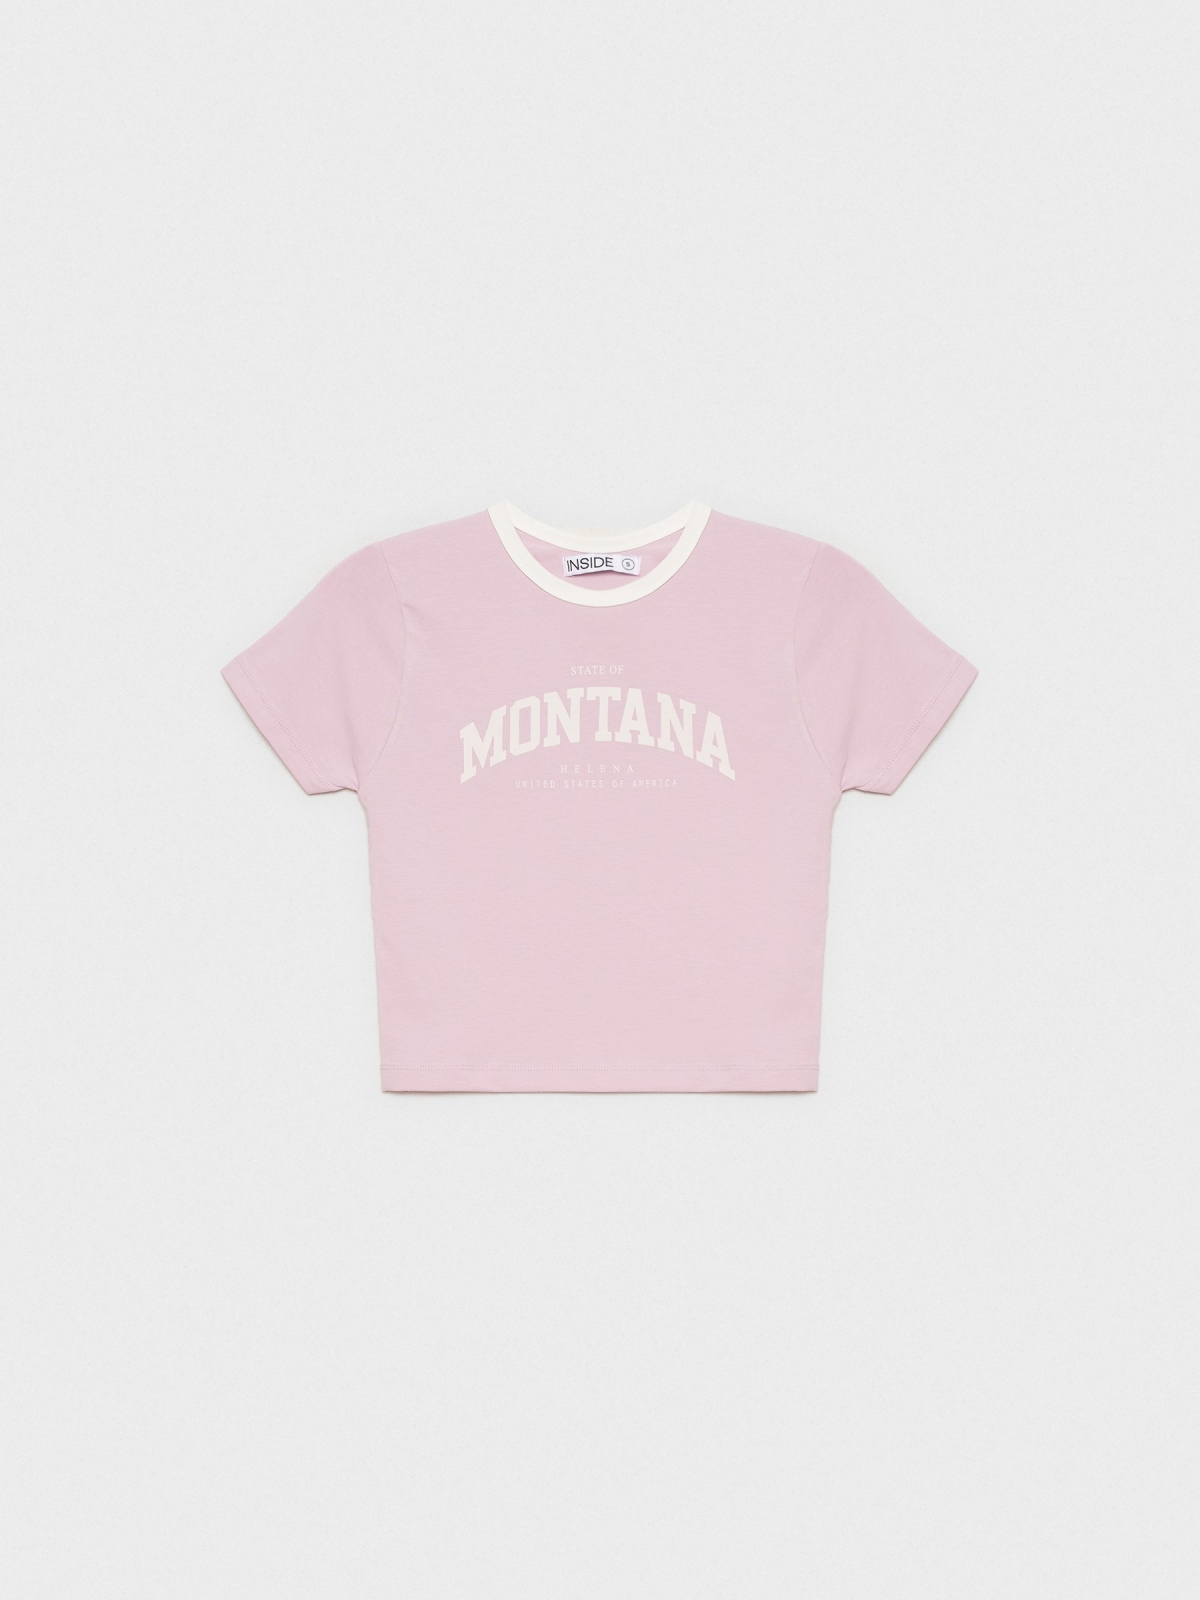  Camiseta crop Montana malva